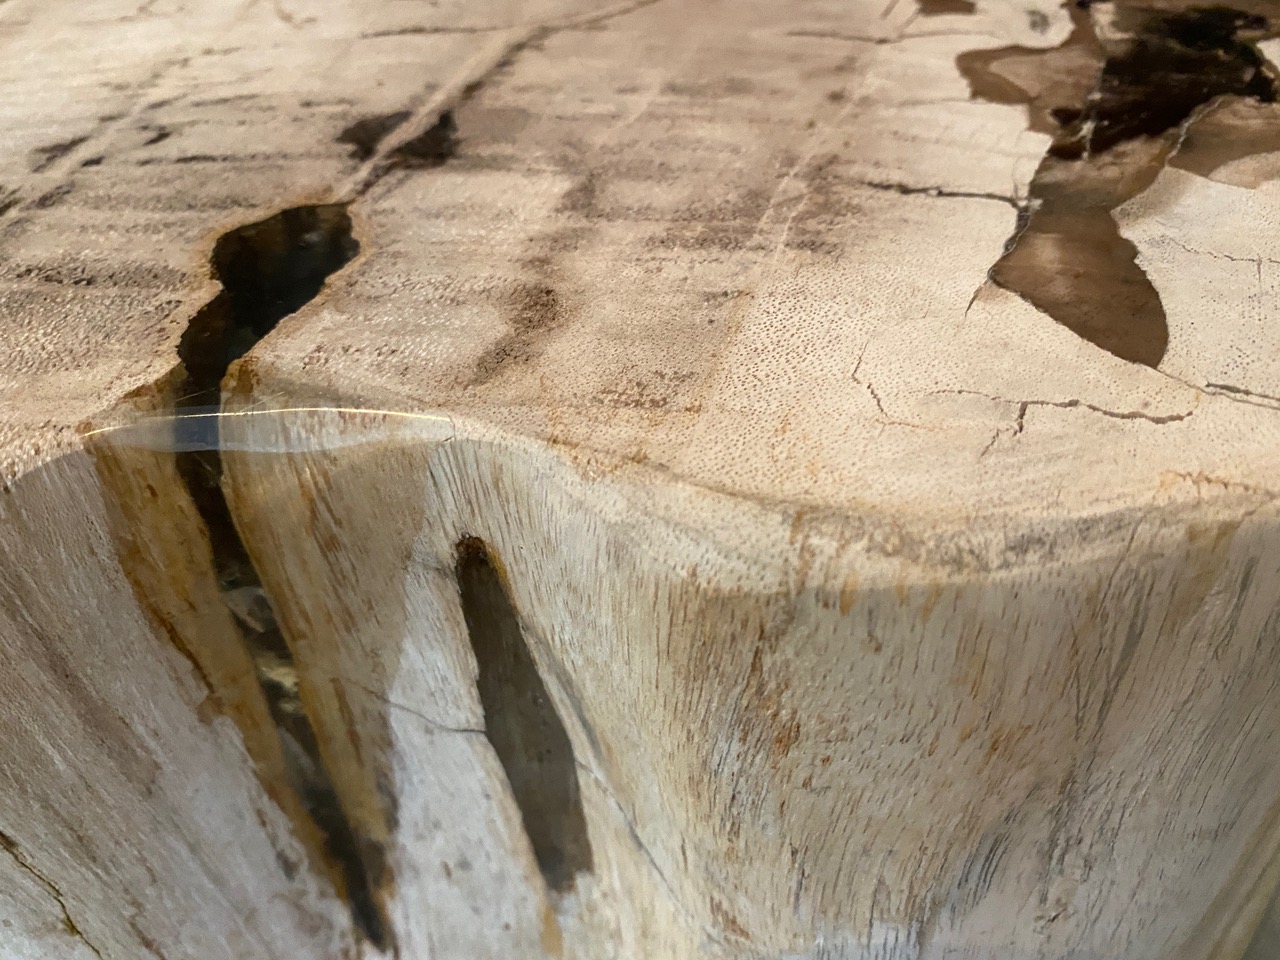 two tone petrified wood side table